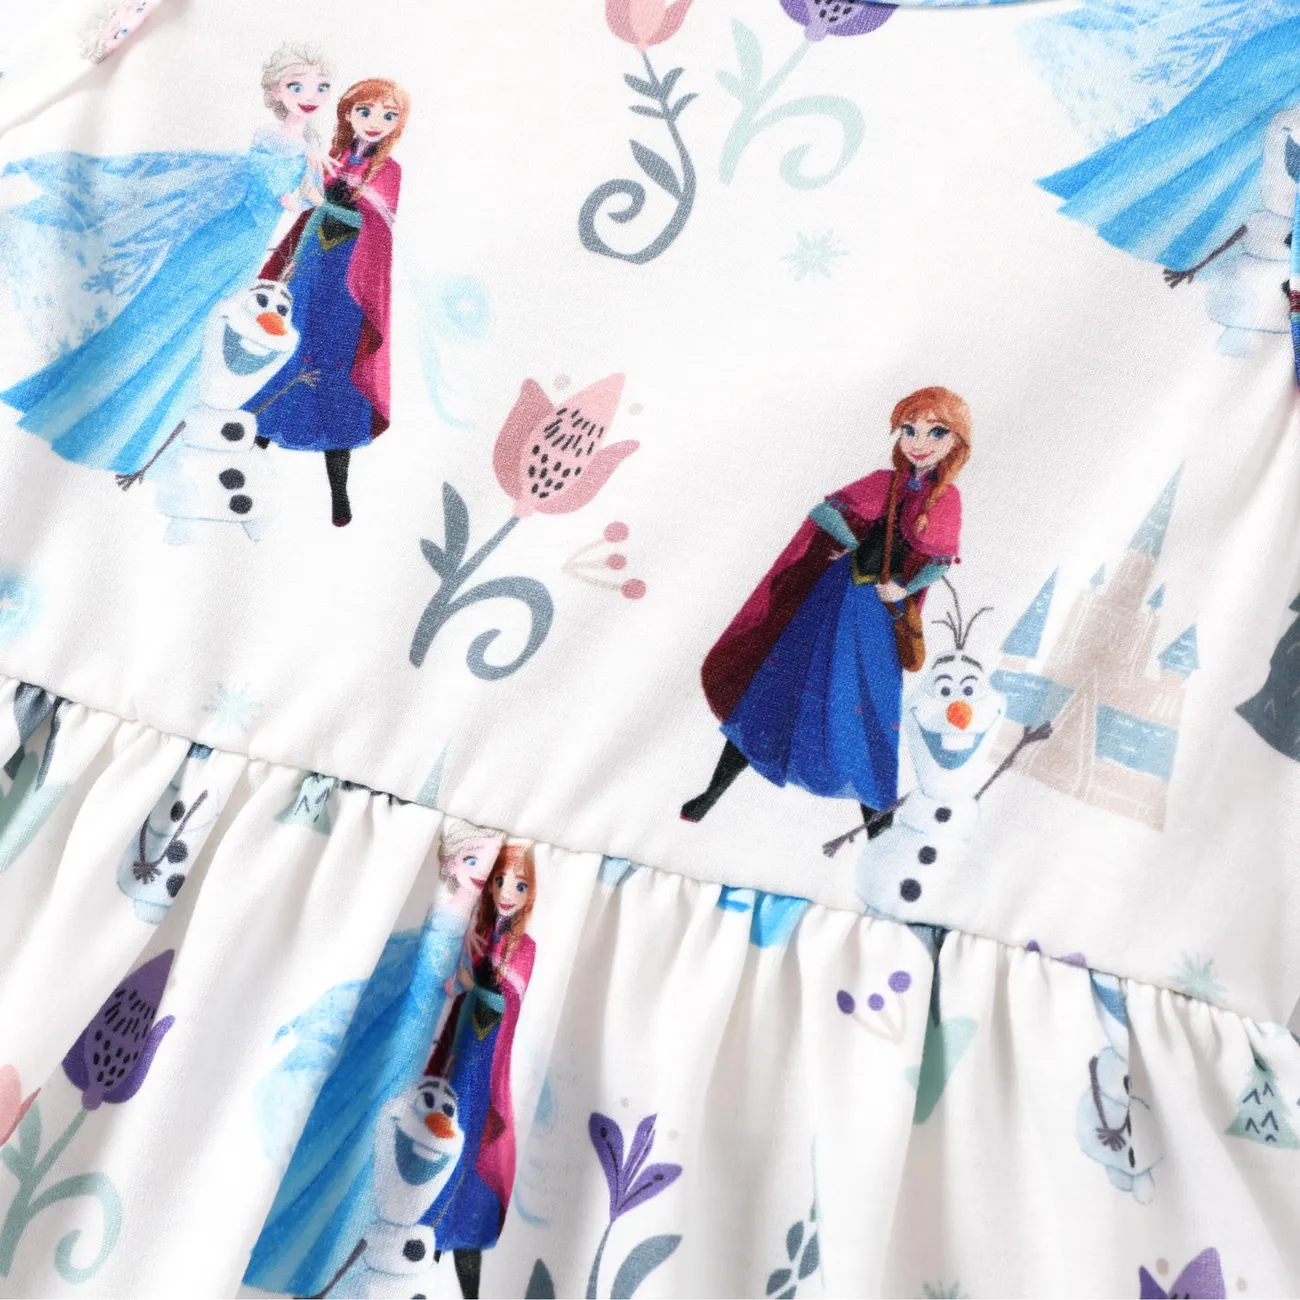 Disney Frozen Elsa & Anna 1pc Naia™ Character Print Ruffled/Sleeveless Dress White big image 1